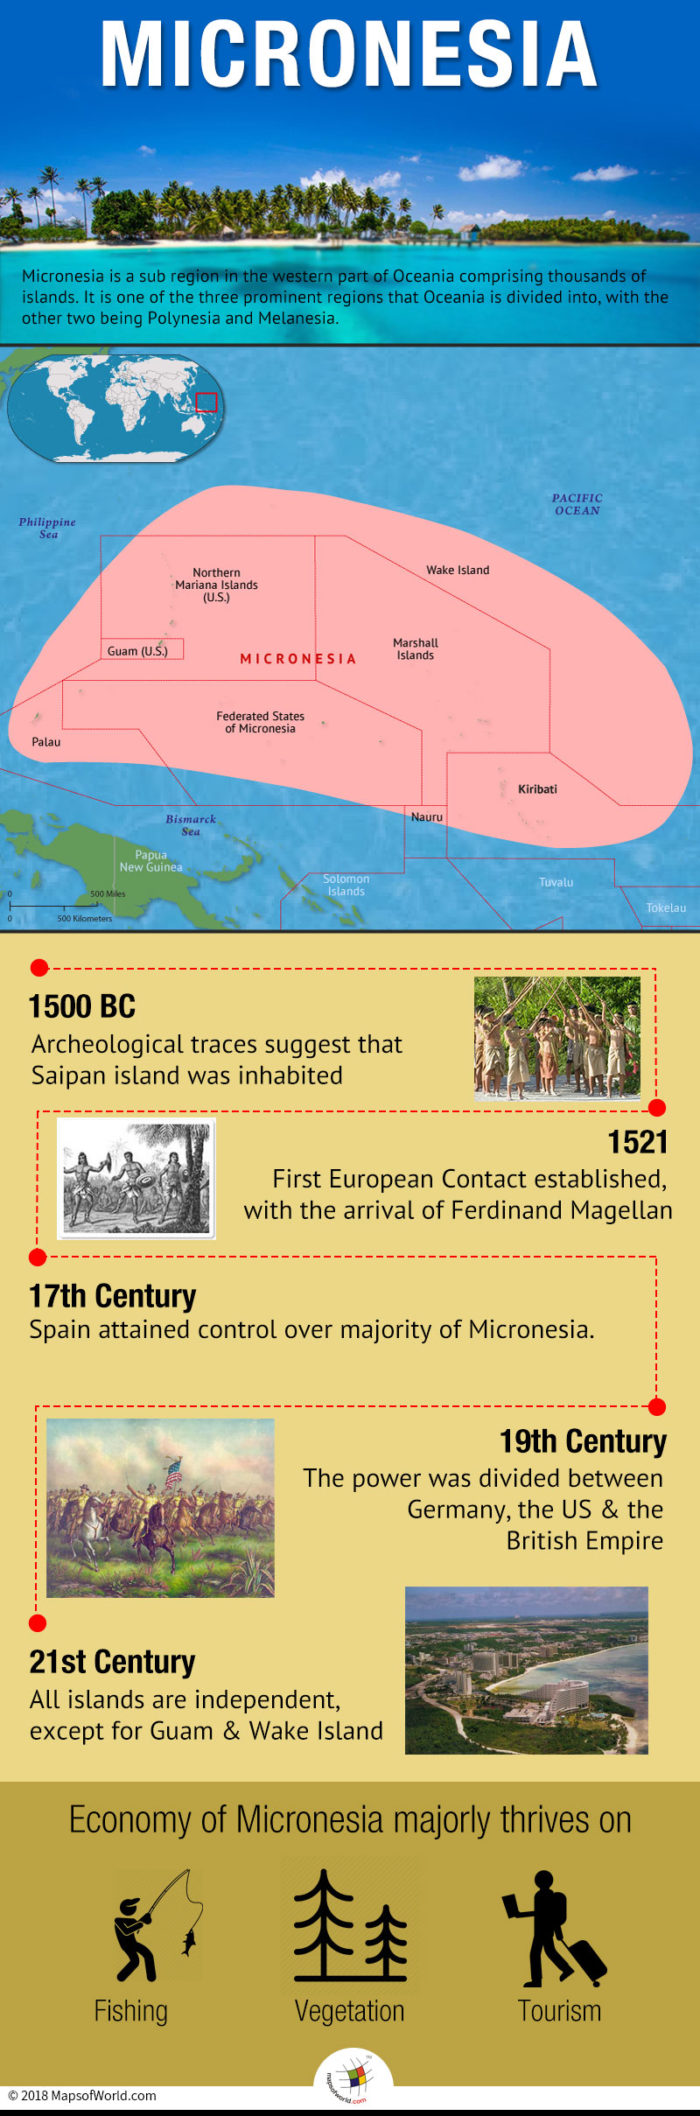 Infographic elaborating Micronesia